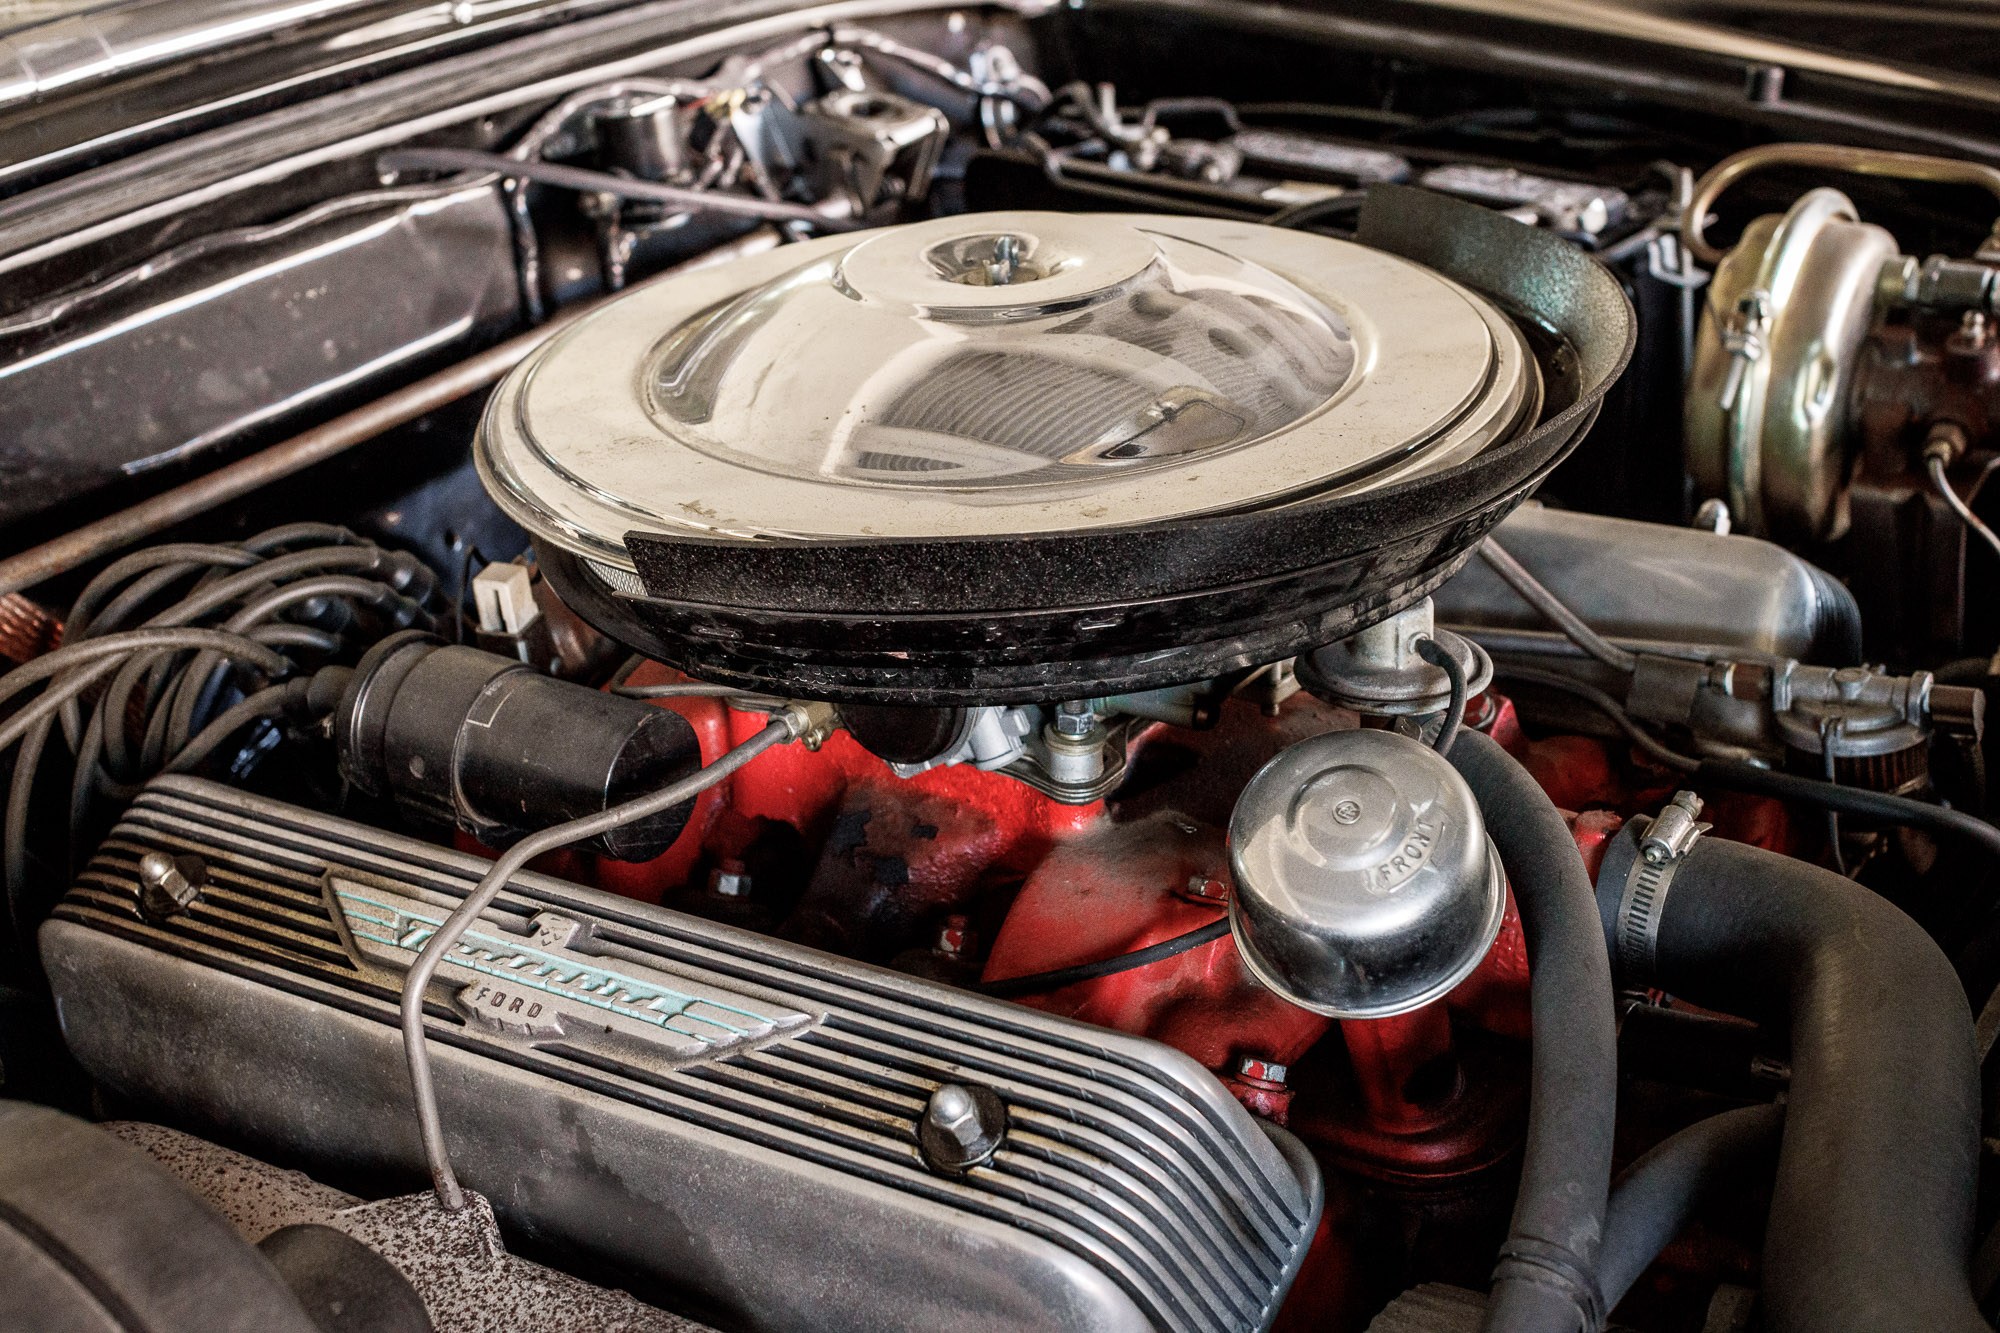 1957 Ford Thunderbird Engine Bay